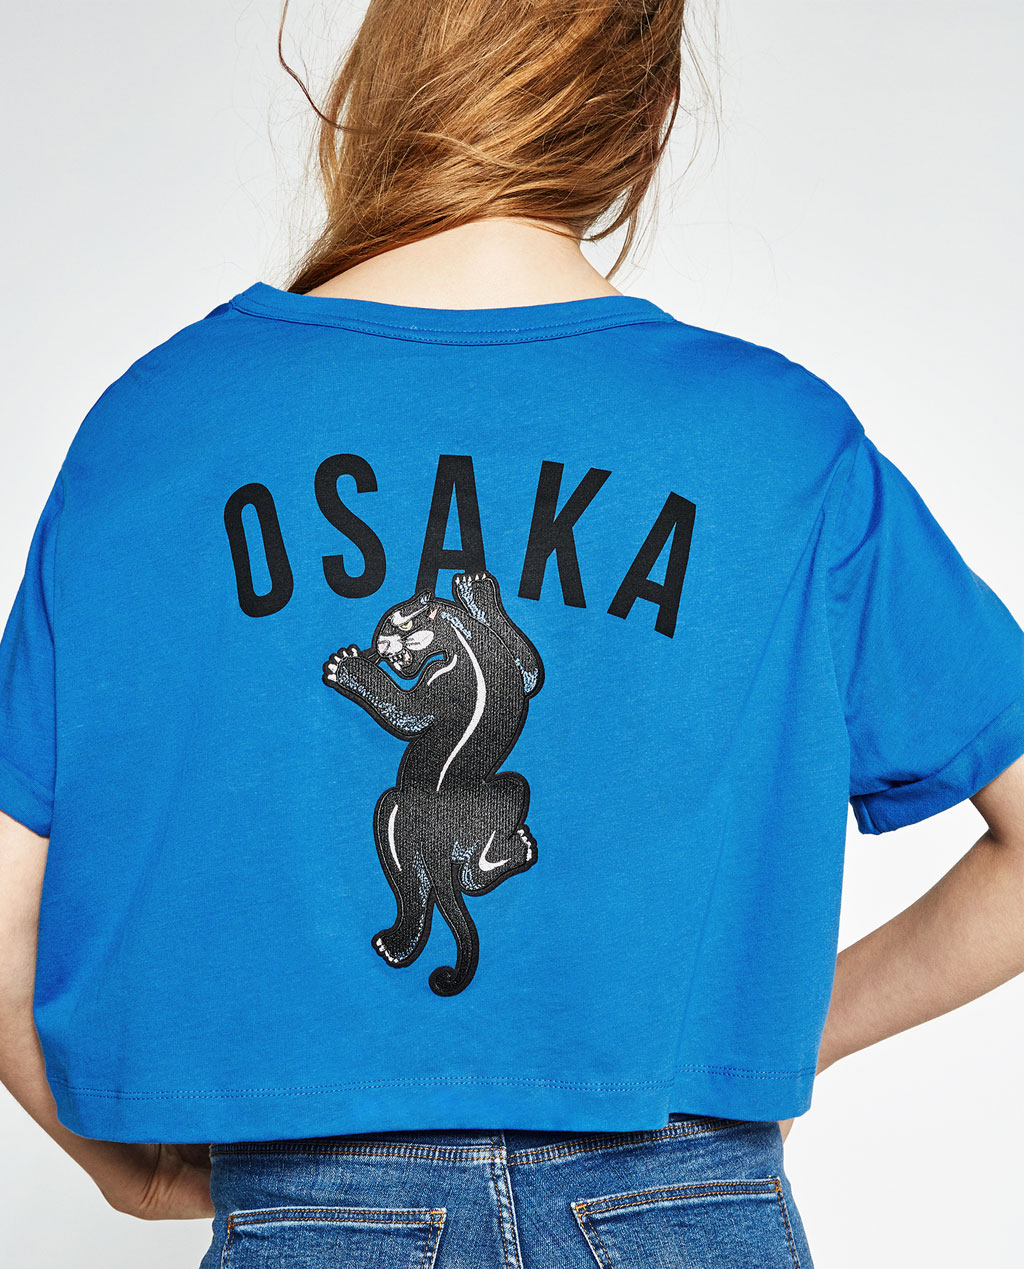  Zara  Osaka T  Shirt  mit Aufn her Bedeutung des Shirts  